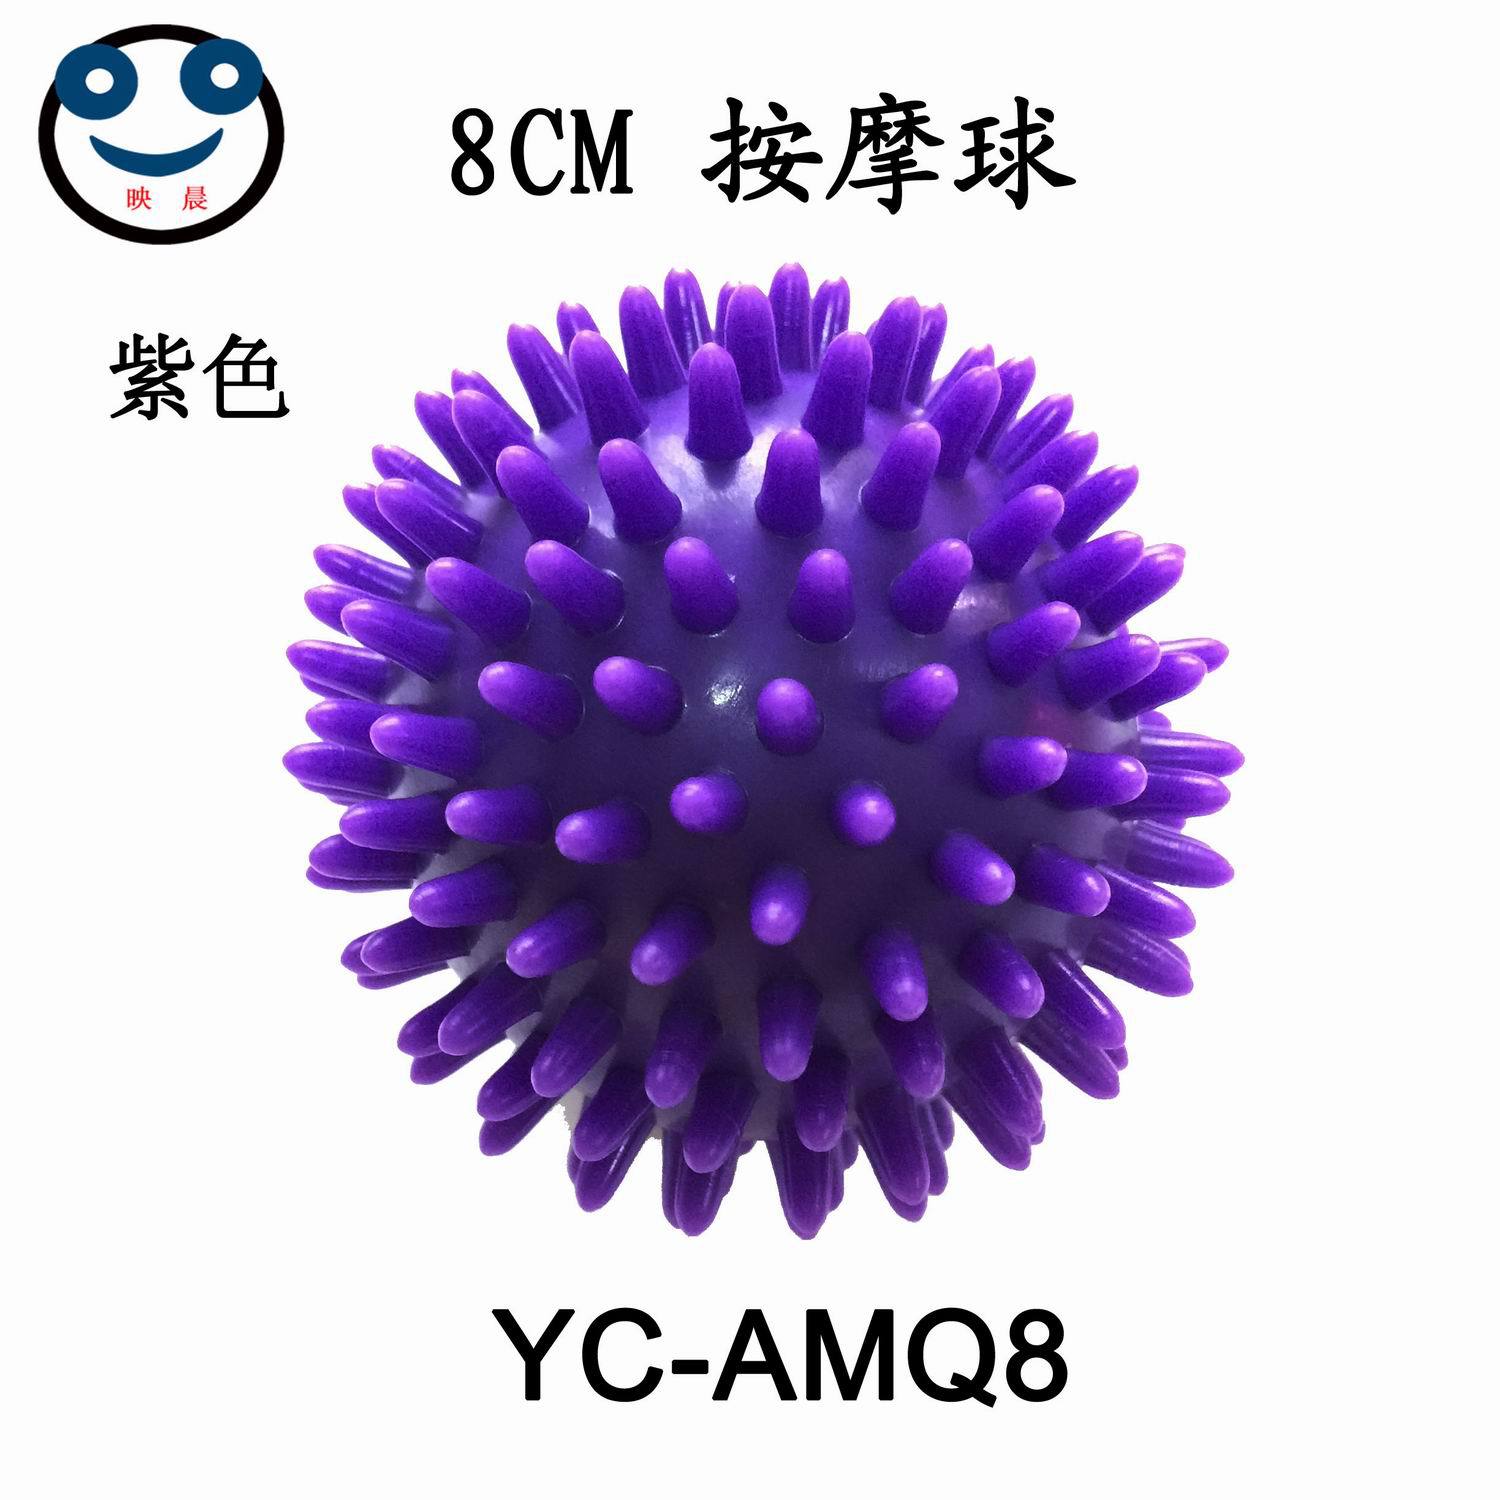 8CM 按摩球紫色